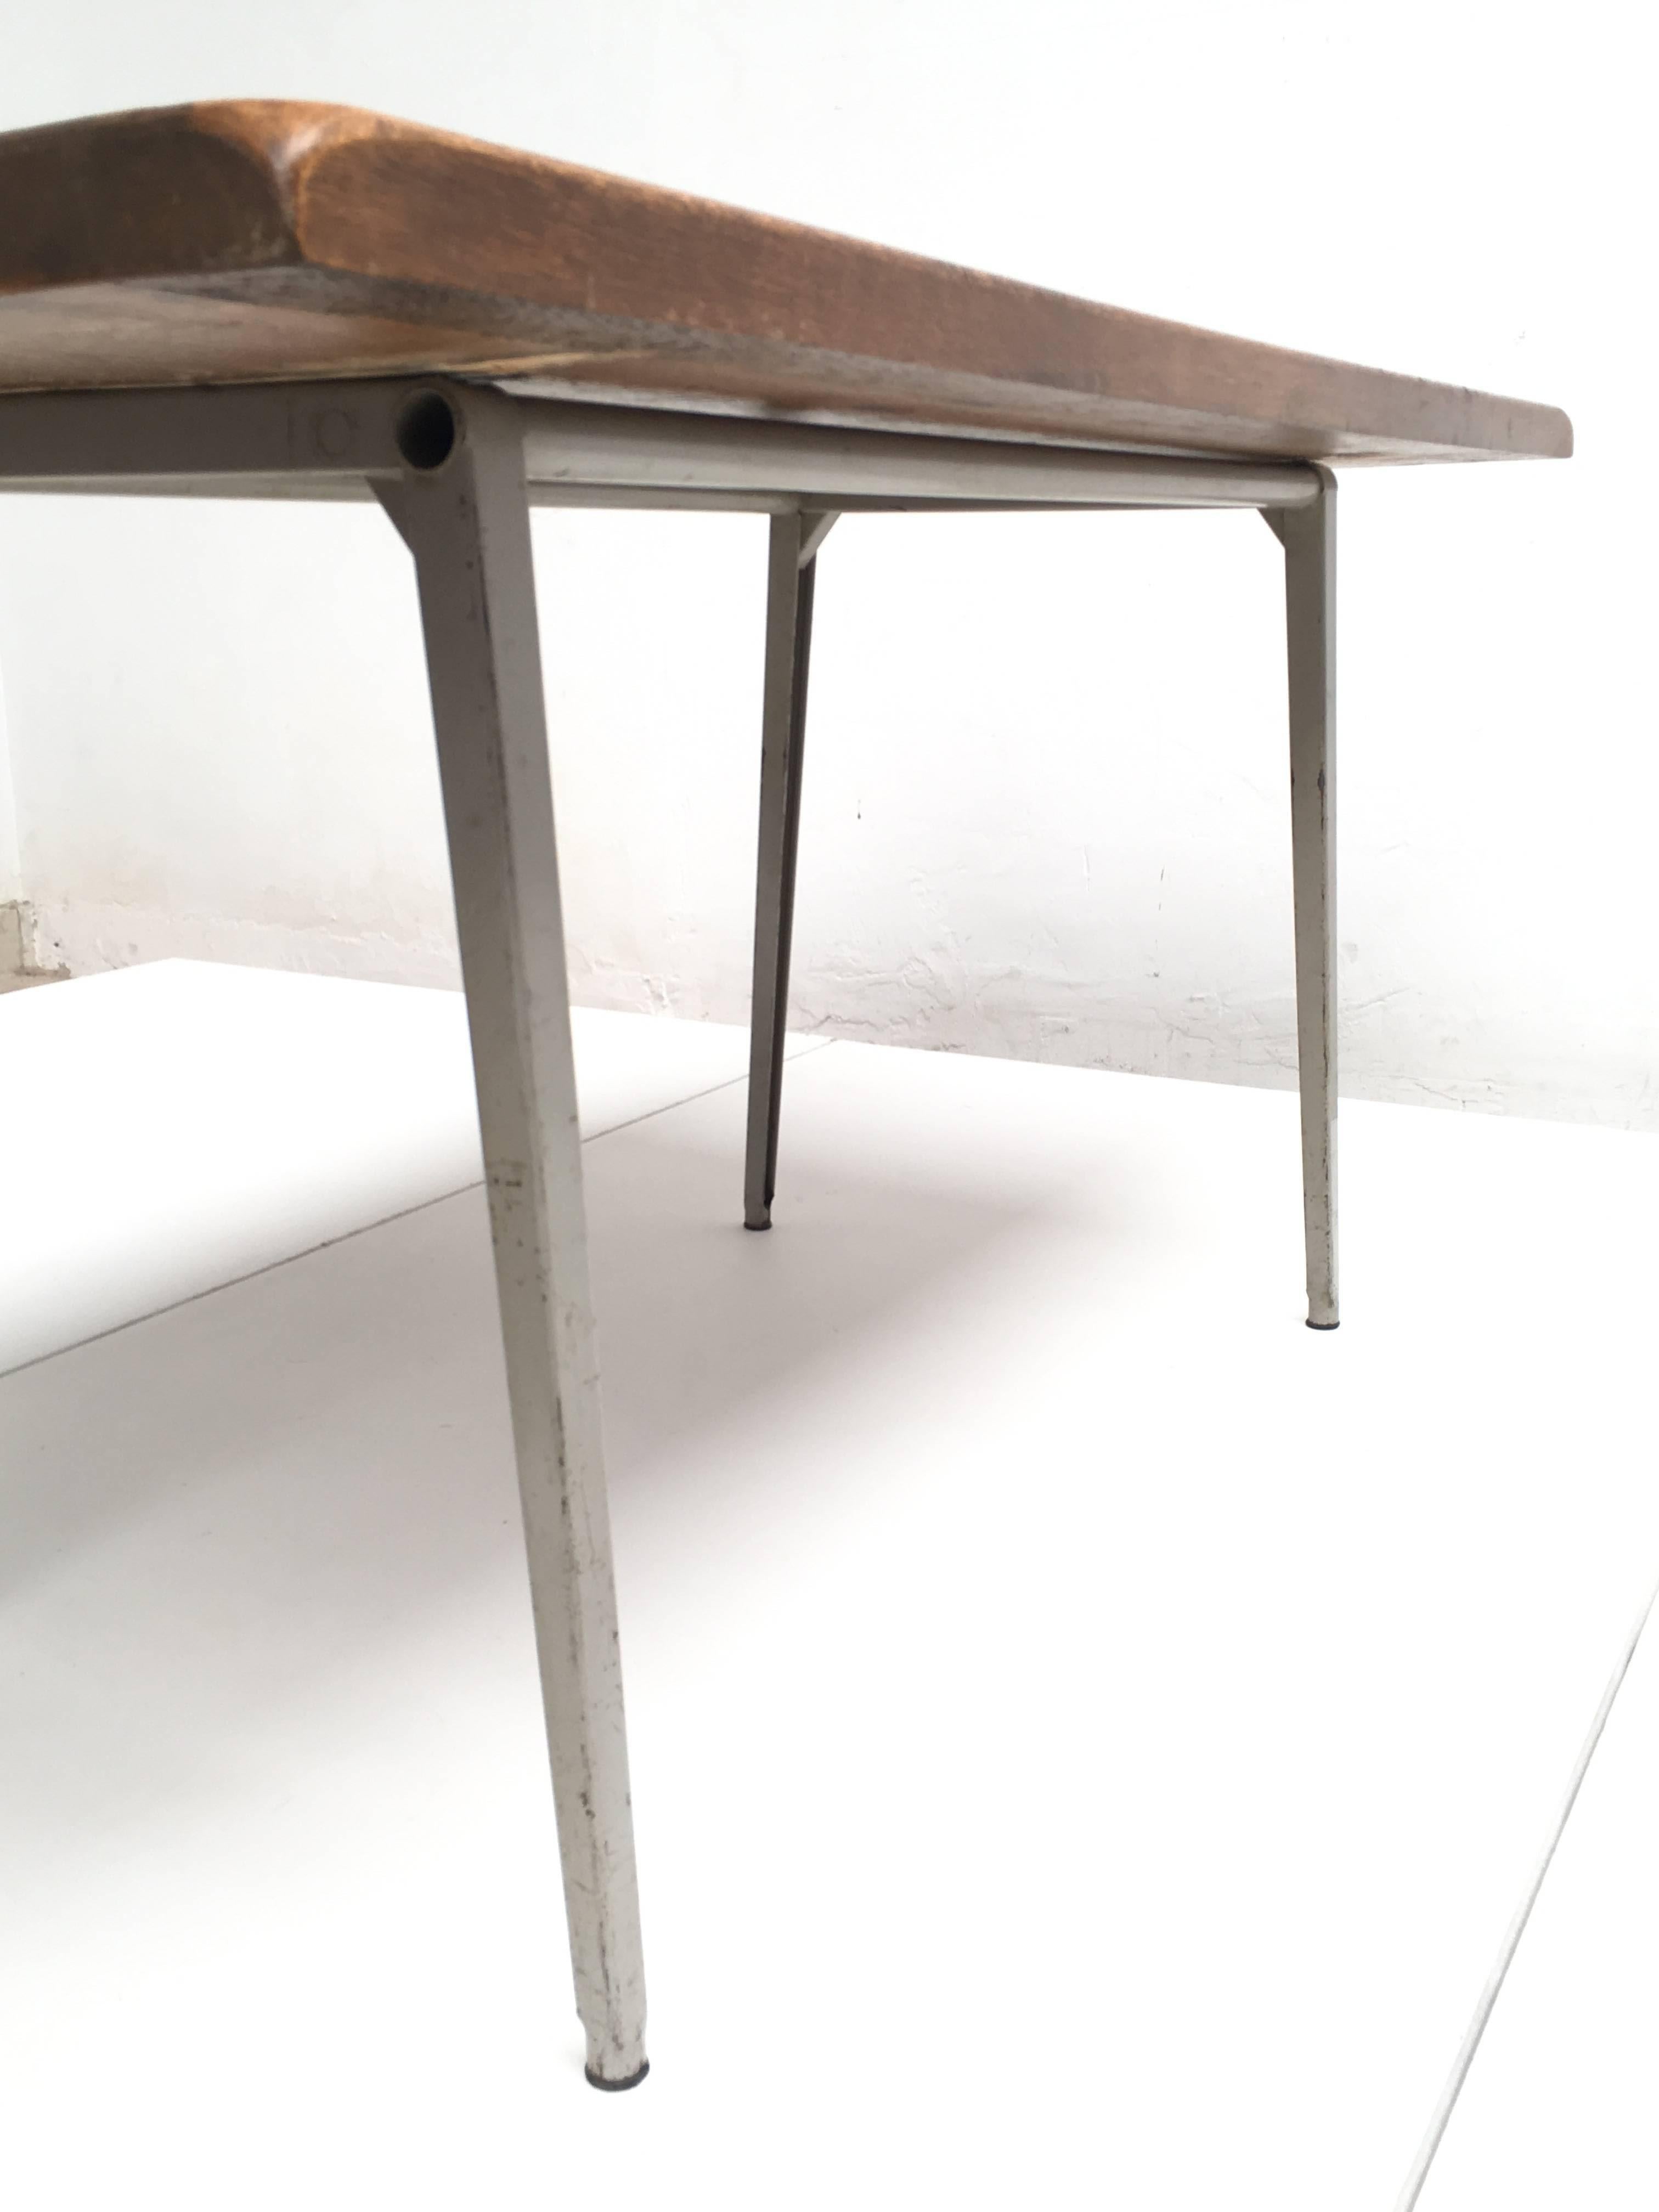 Friso Kramer 'Reform' Table or Desk with Reclaimed Rustic Oak Top In Good Condition For Sale In bergen op zoom, NL